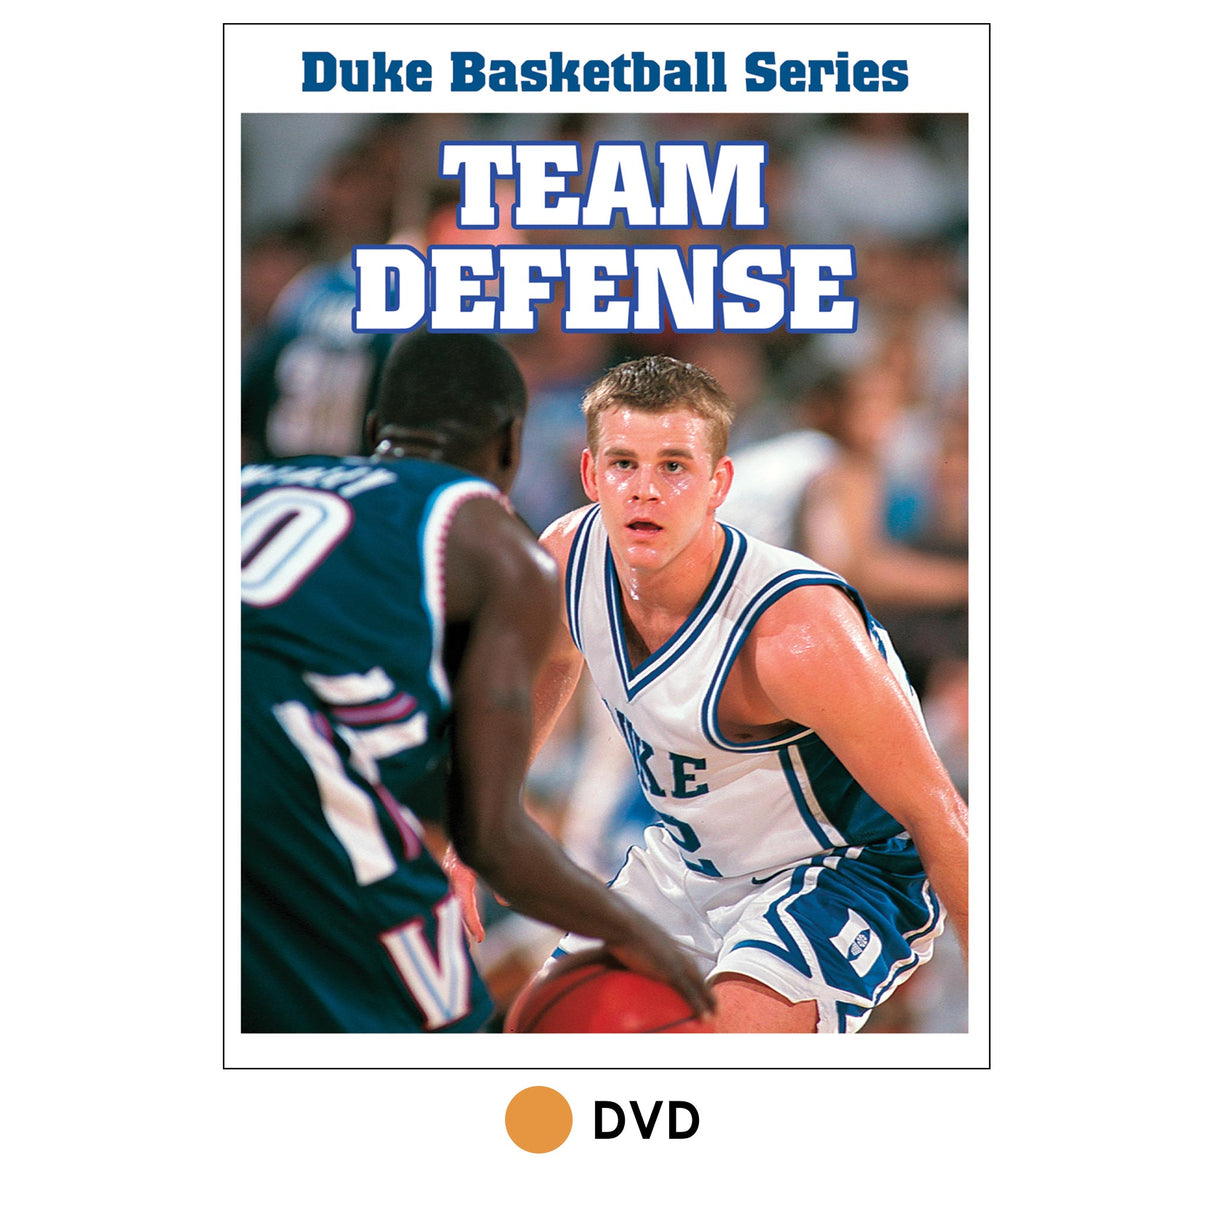 Duke Basketball Video Series: Team Defense DVD